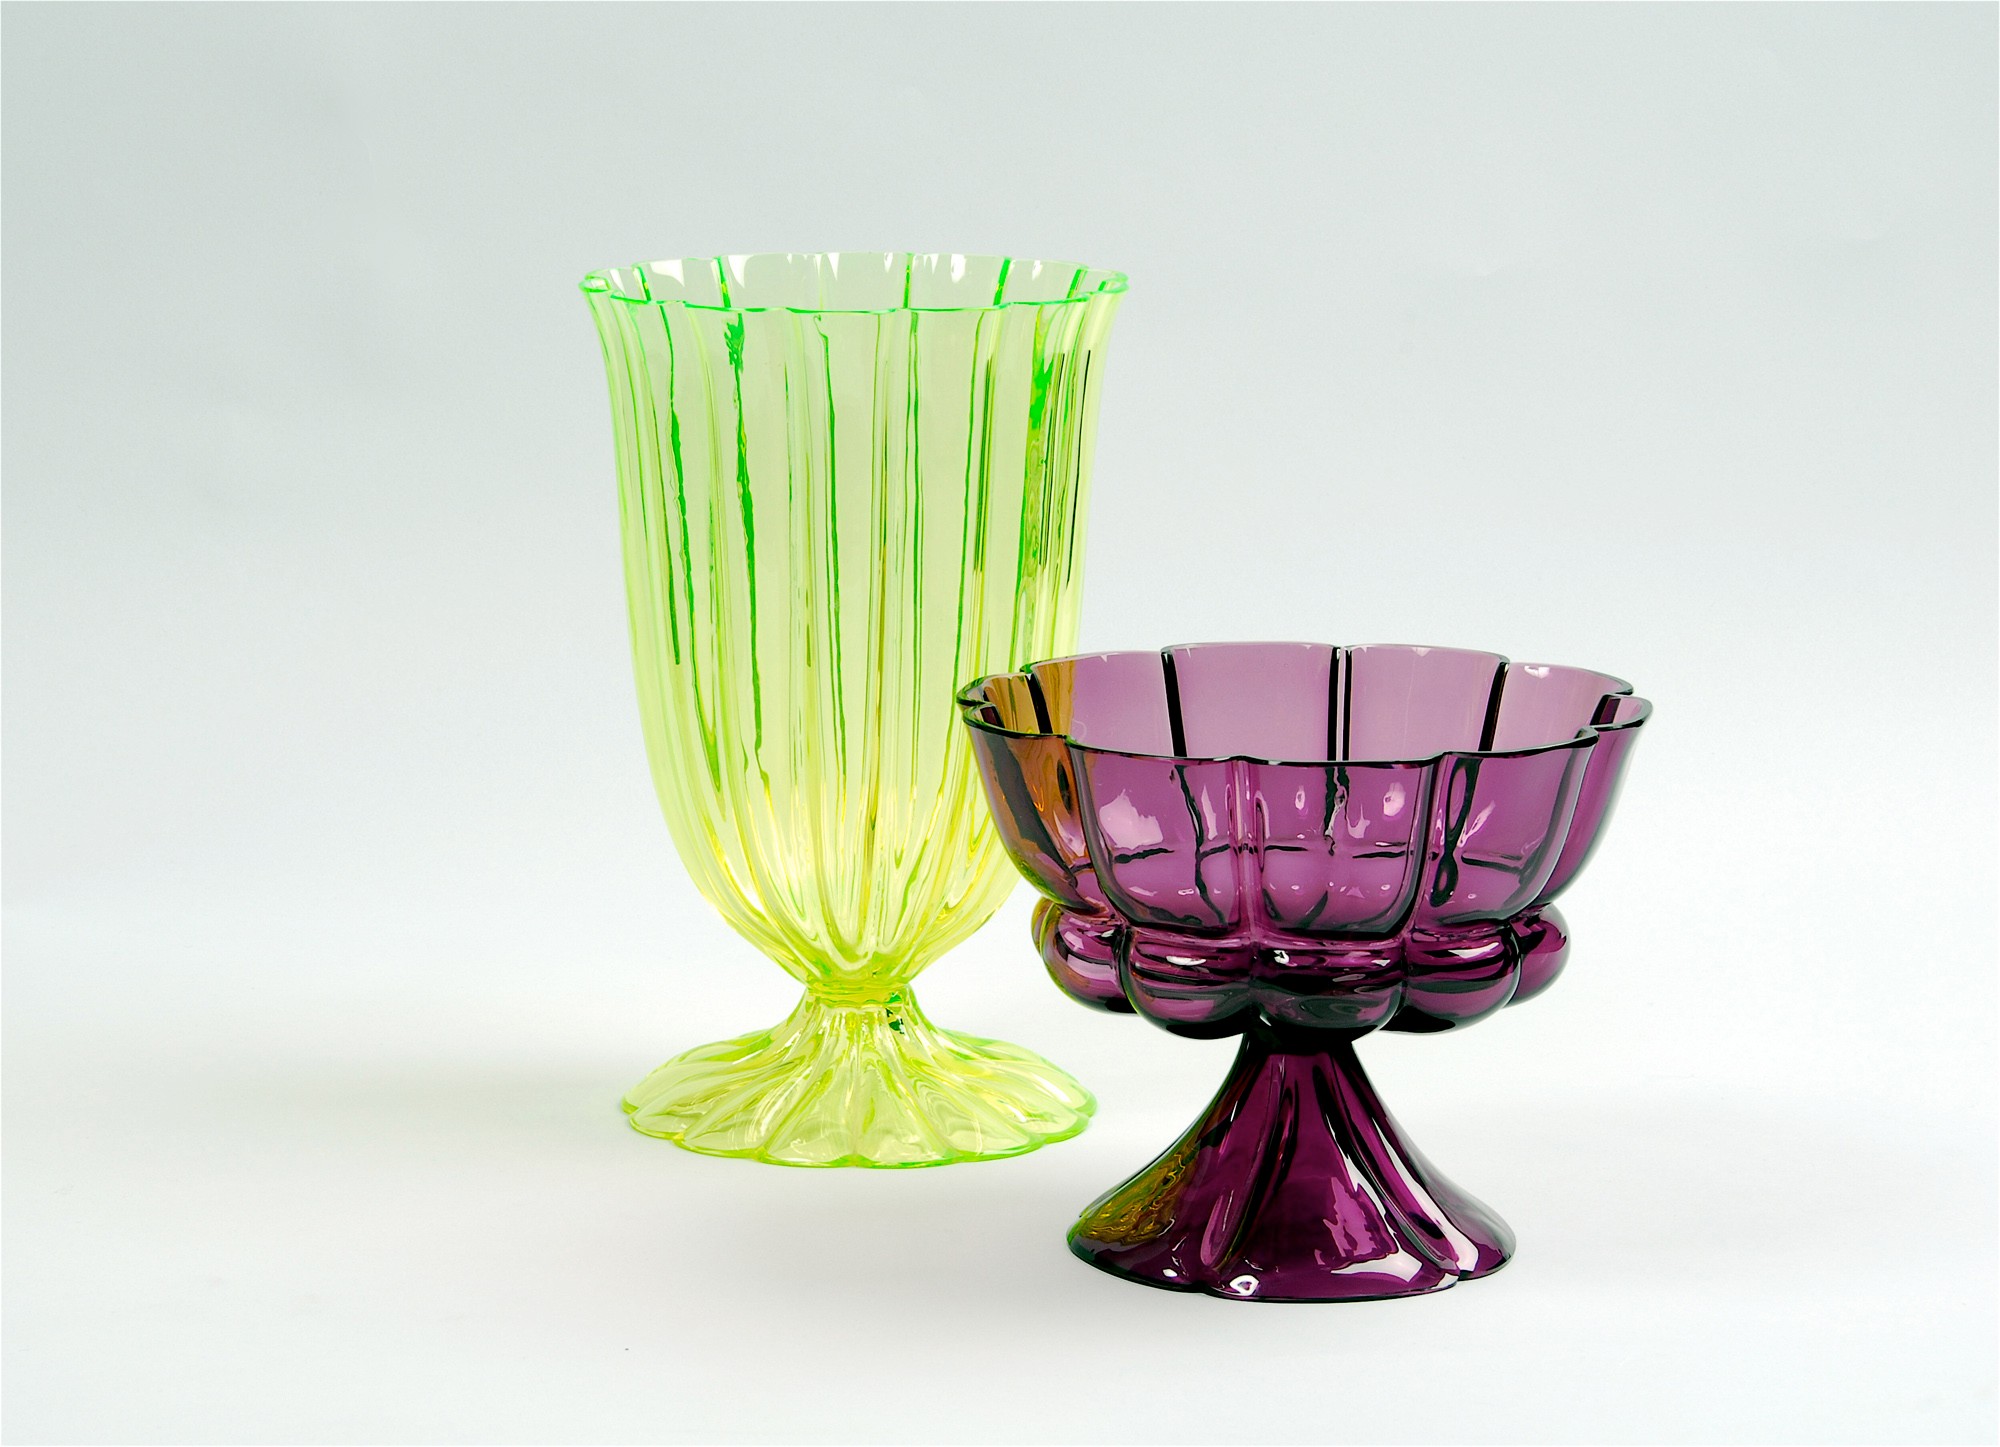 Josef Hoffmann: Vases